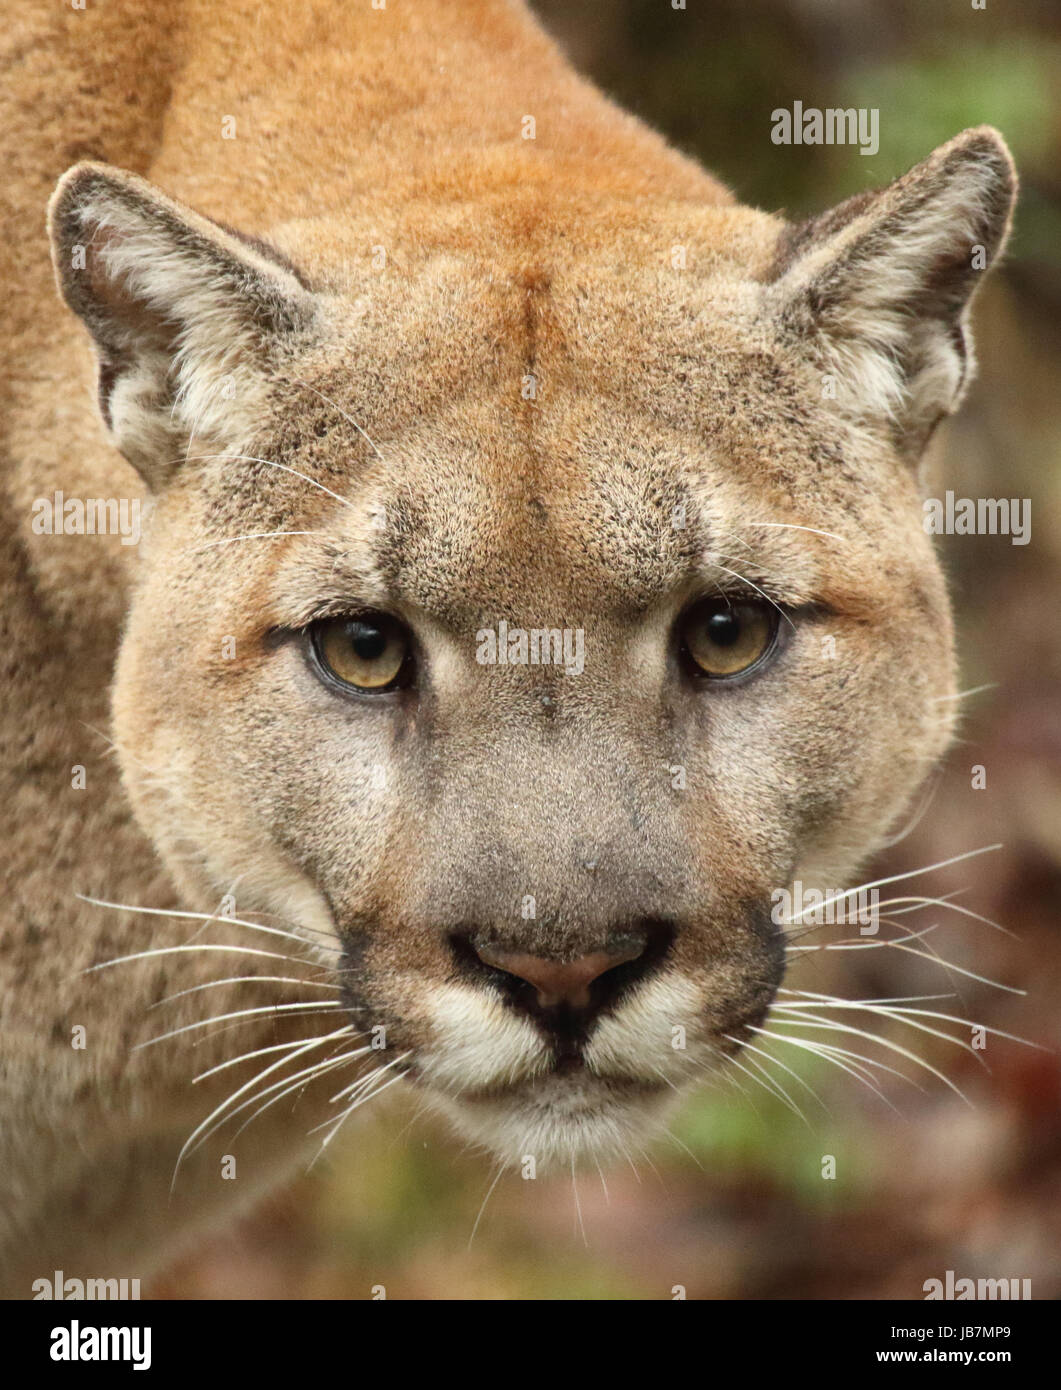 Puma face wildlife -Fotos und -Bildmaterial in hoher Auflösung – Alamy